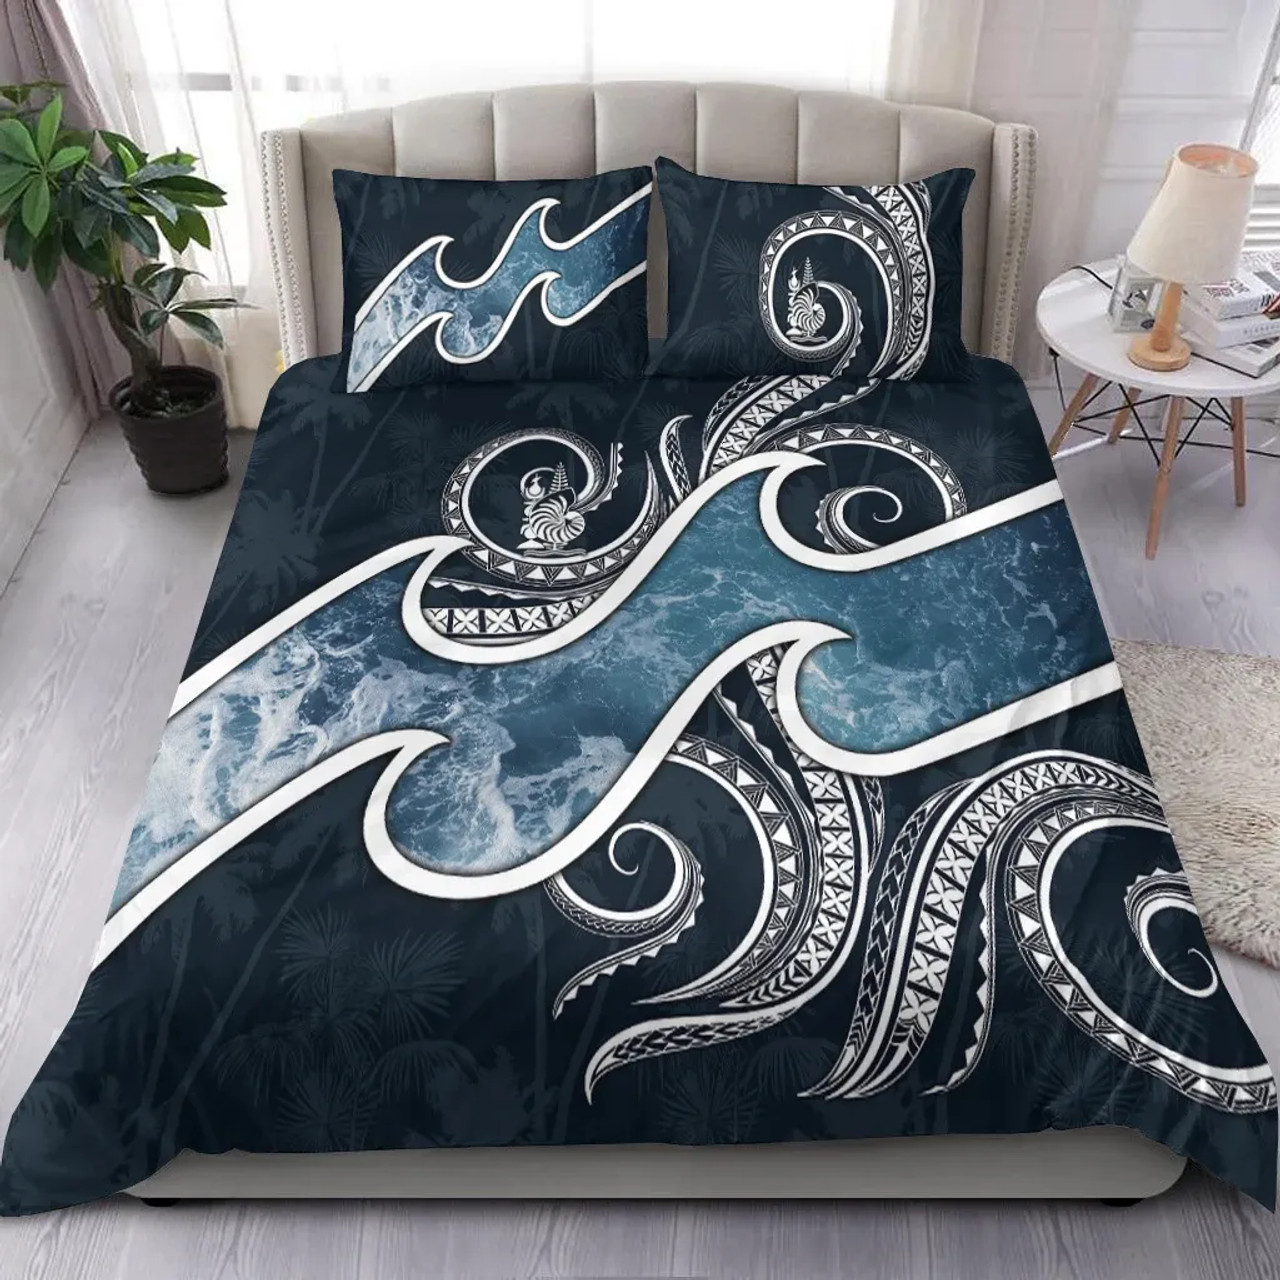 New Caledonia Polynesian Bedding Set - Ocean Style 3